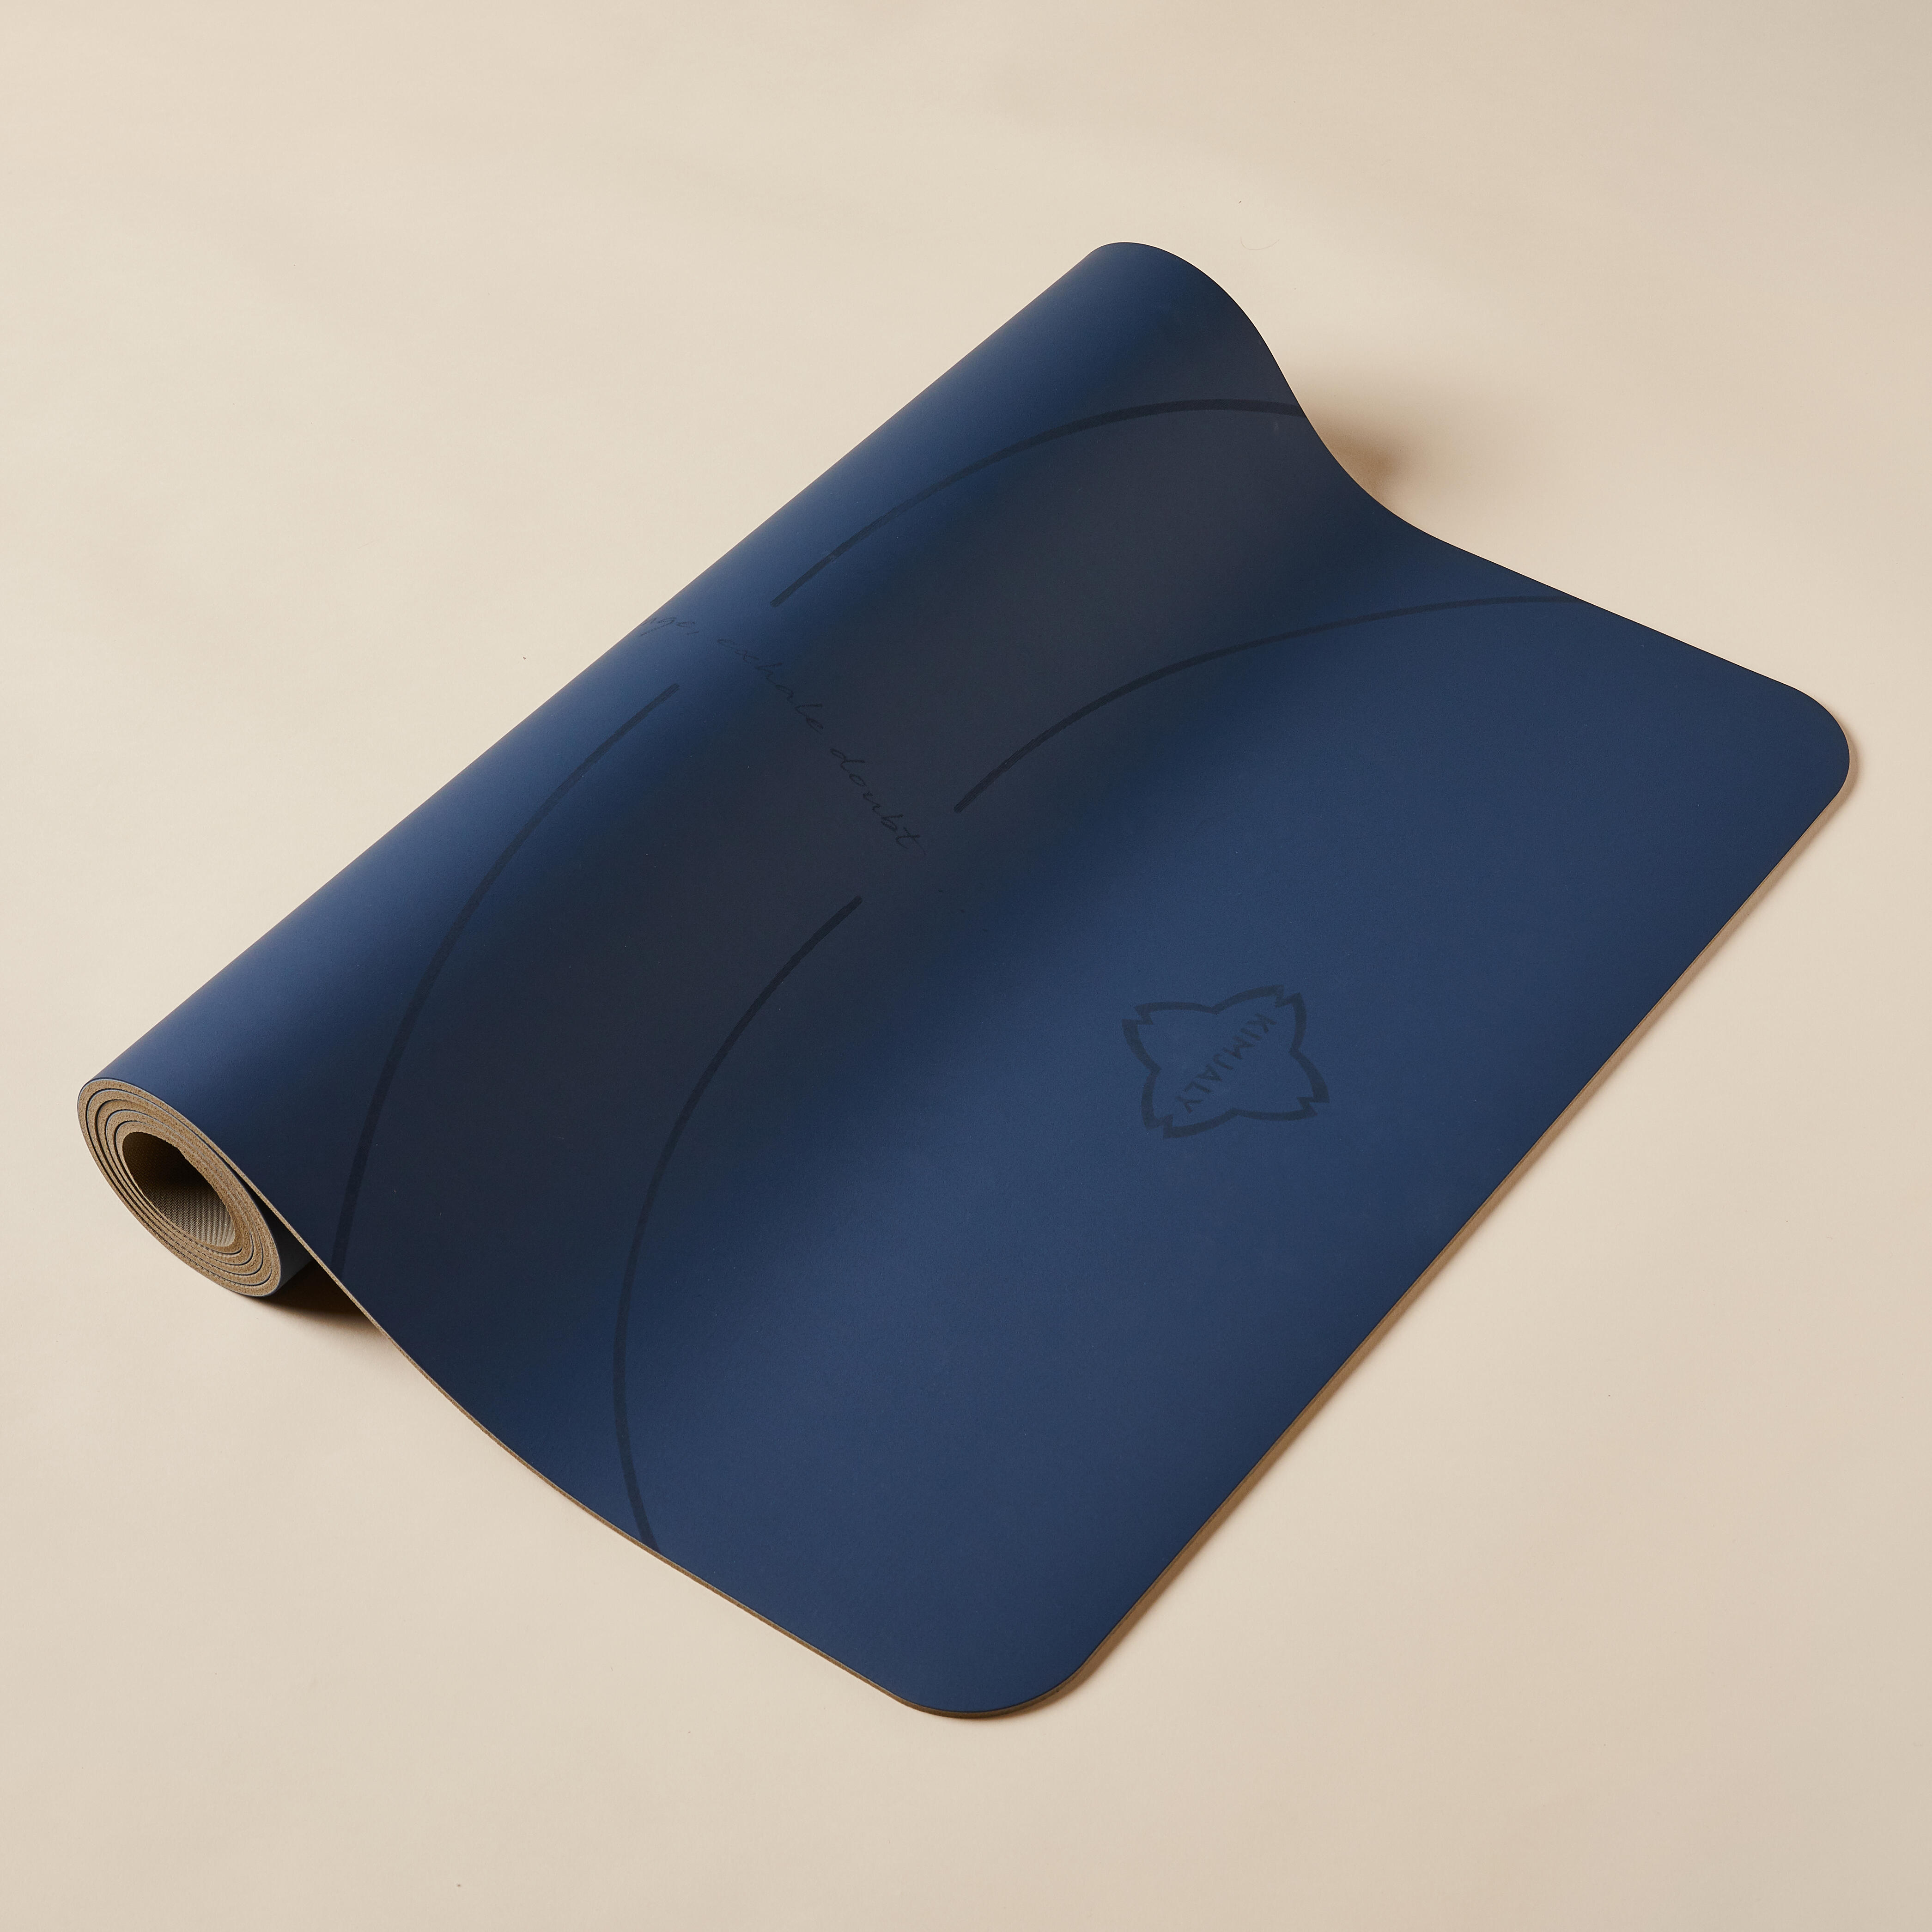 Saltea Yoga Grip+ 5mm bleumarin decathlon.ro  Accesorii fitness cardio